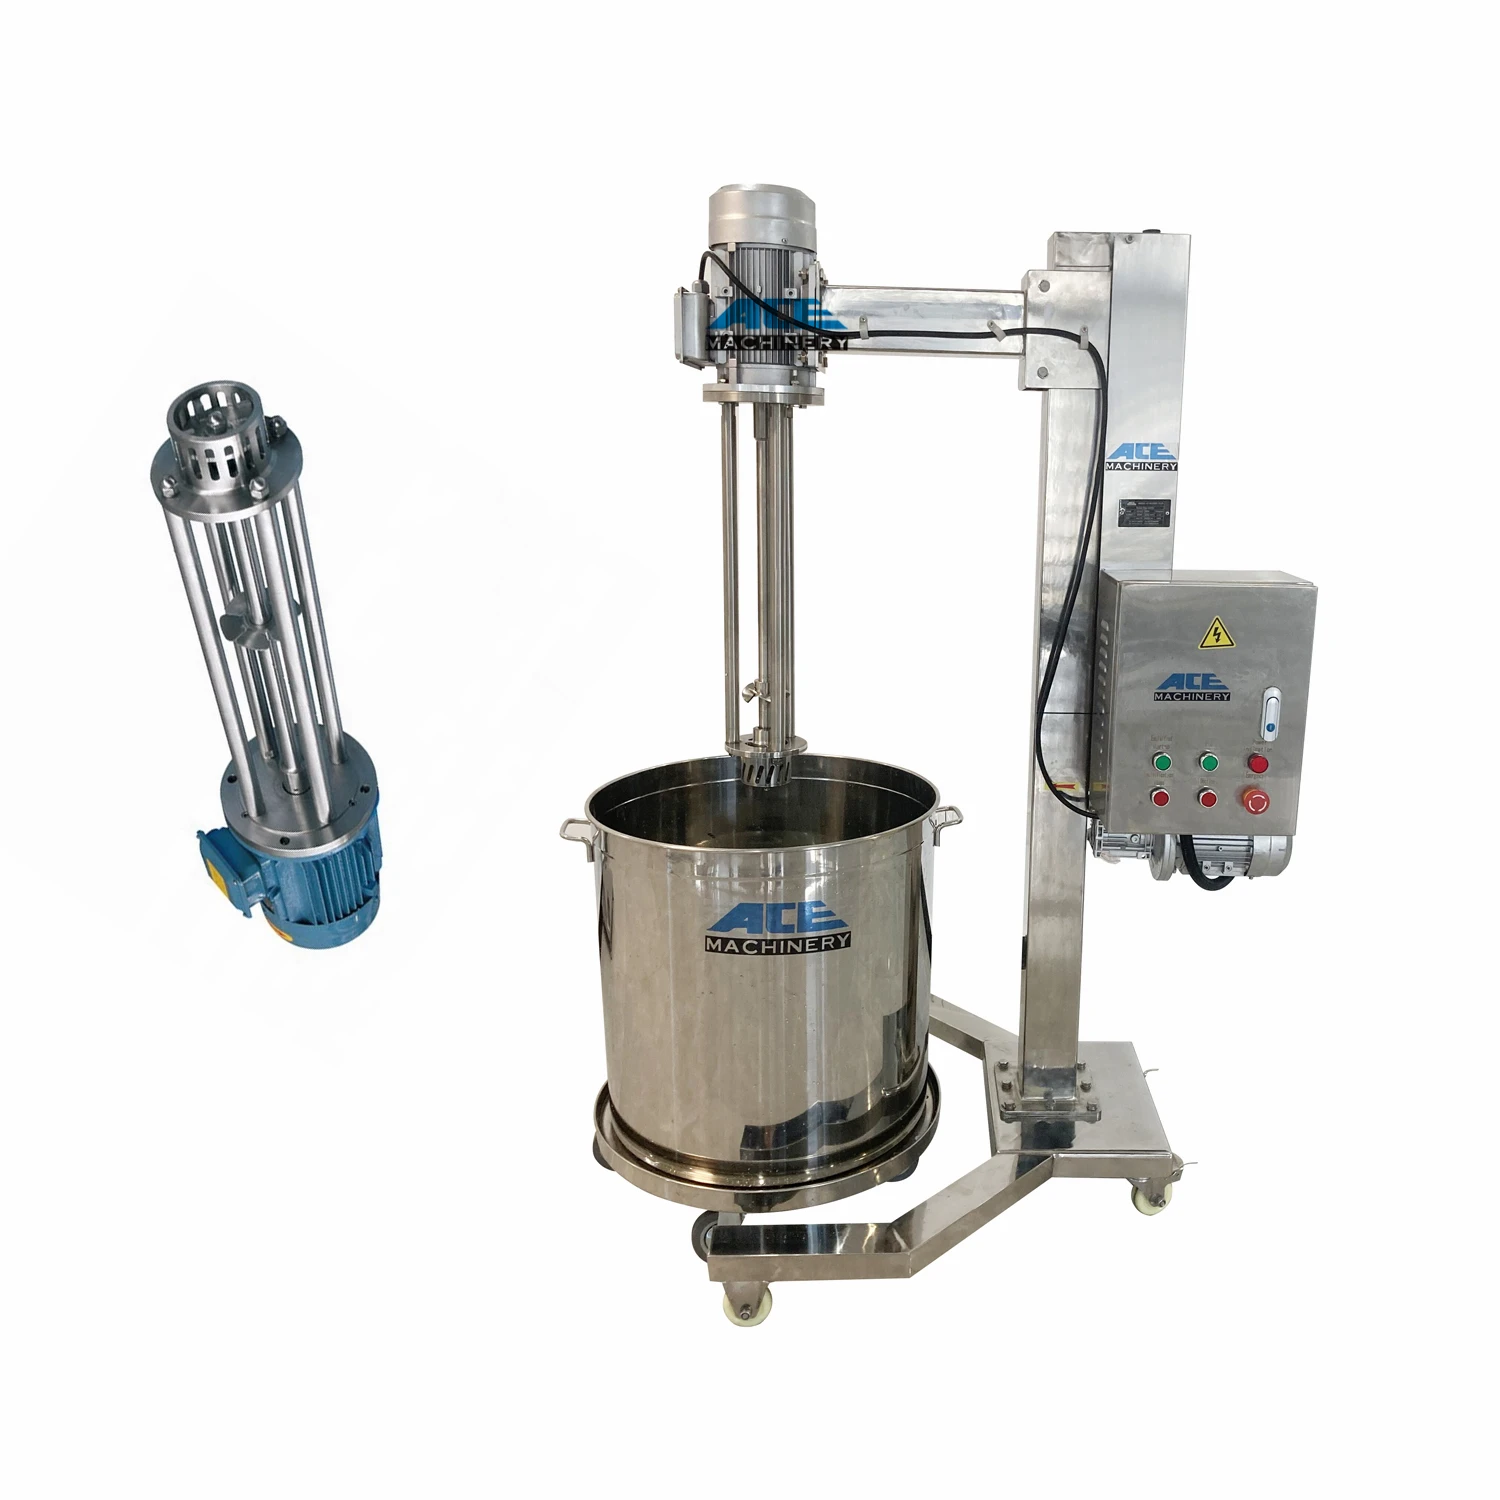 Homogenizer, Portable Liquid Homogenizer Mixer, Liquid Mixer with  Portable Stand Homogenizer